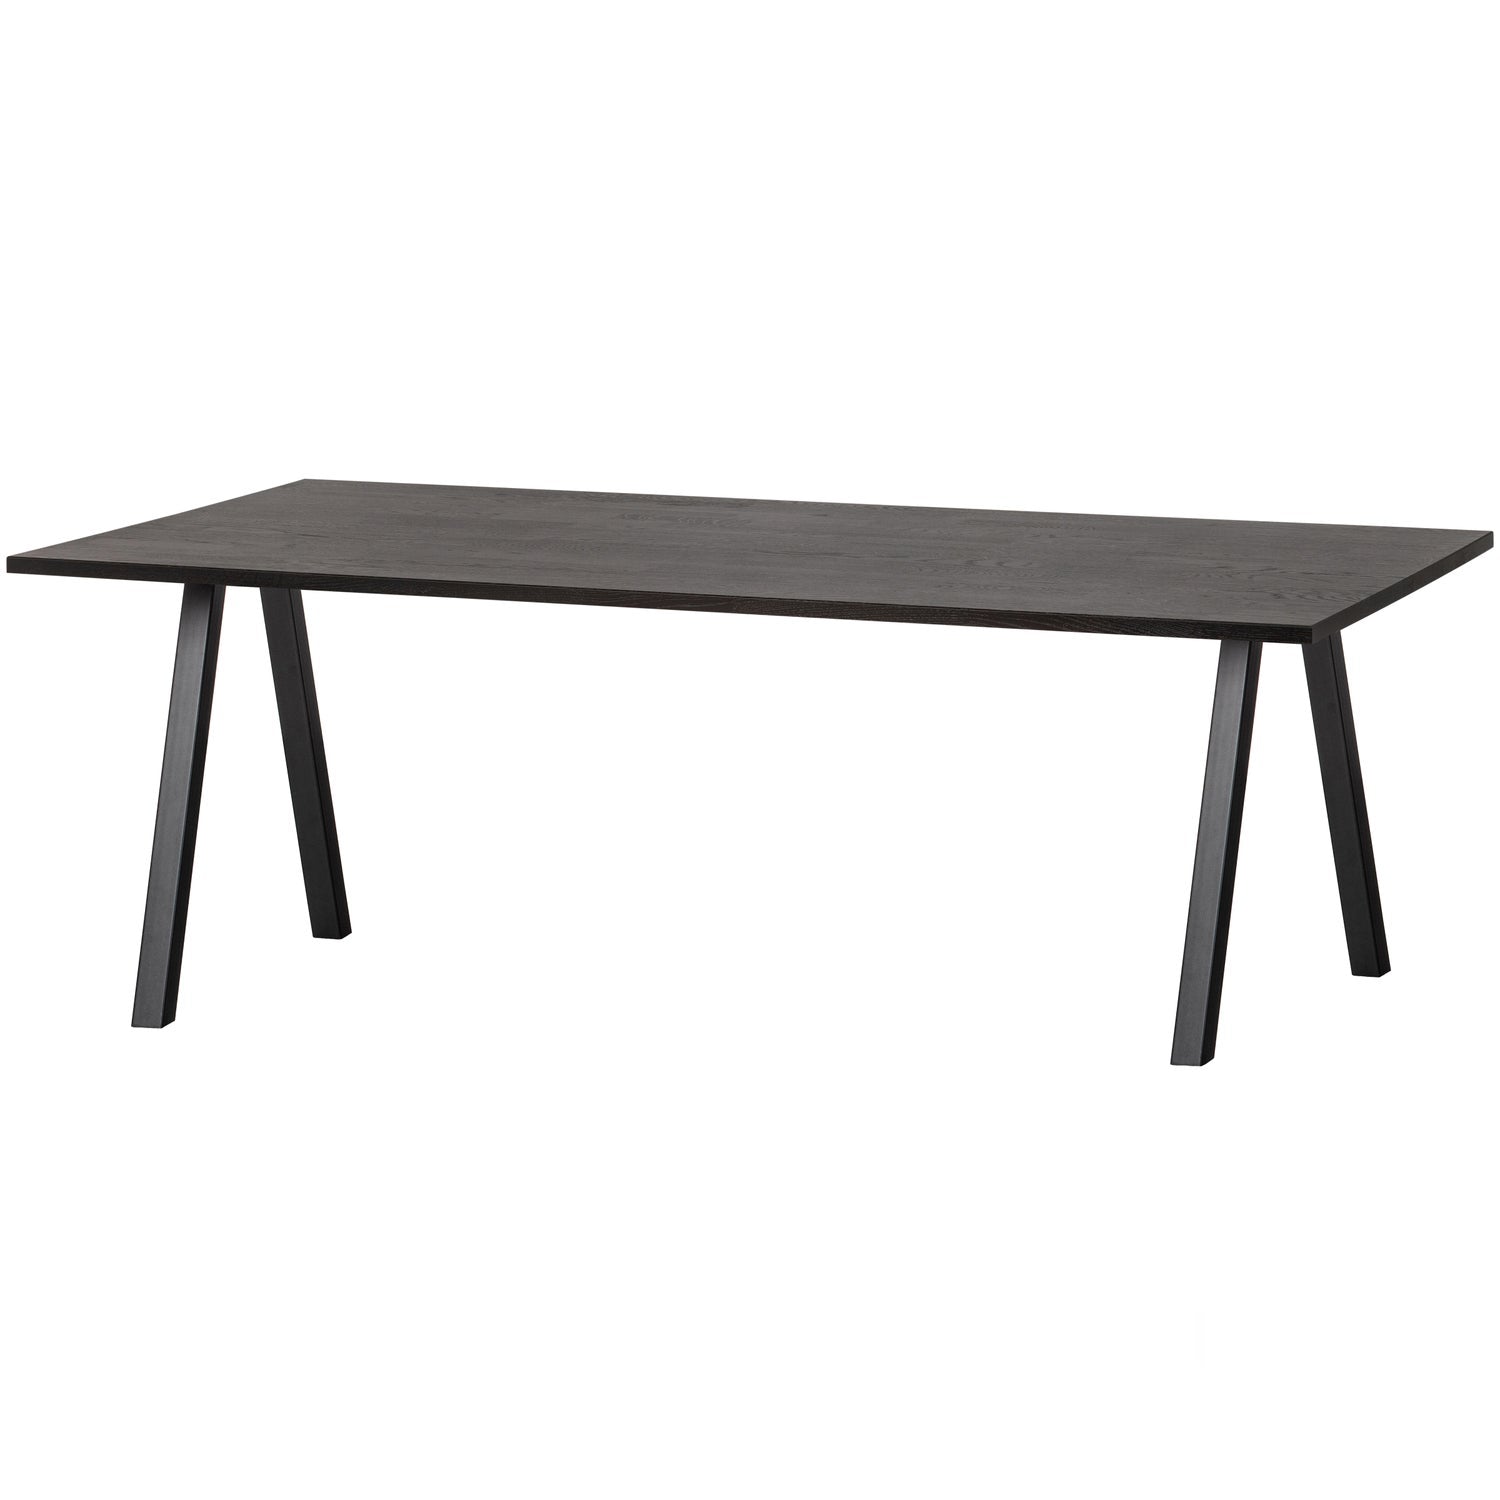 TABLO TABLE OAK BLACKNIGHT 200X90 [fsc] & SQUARE LEG